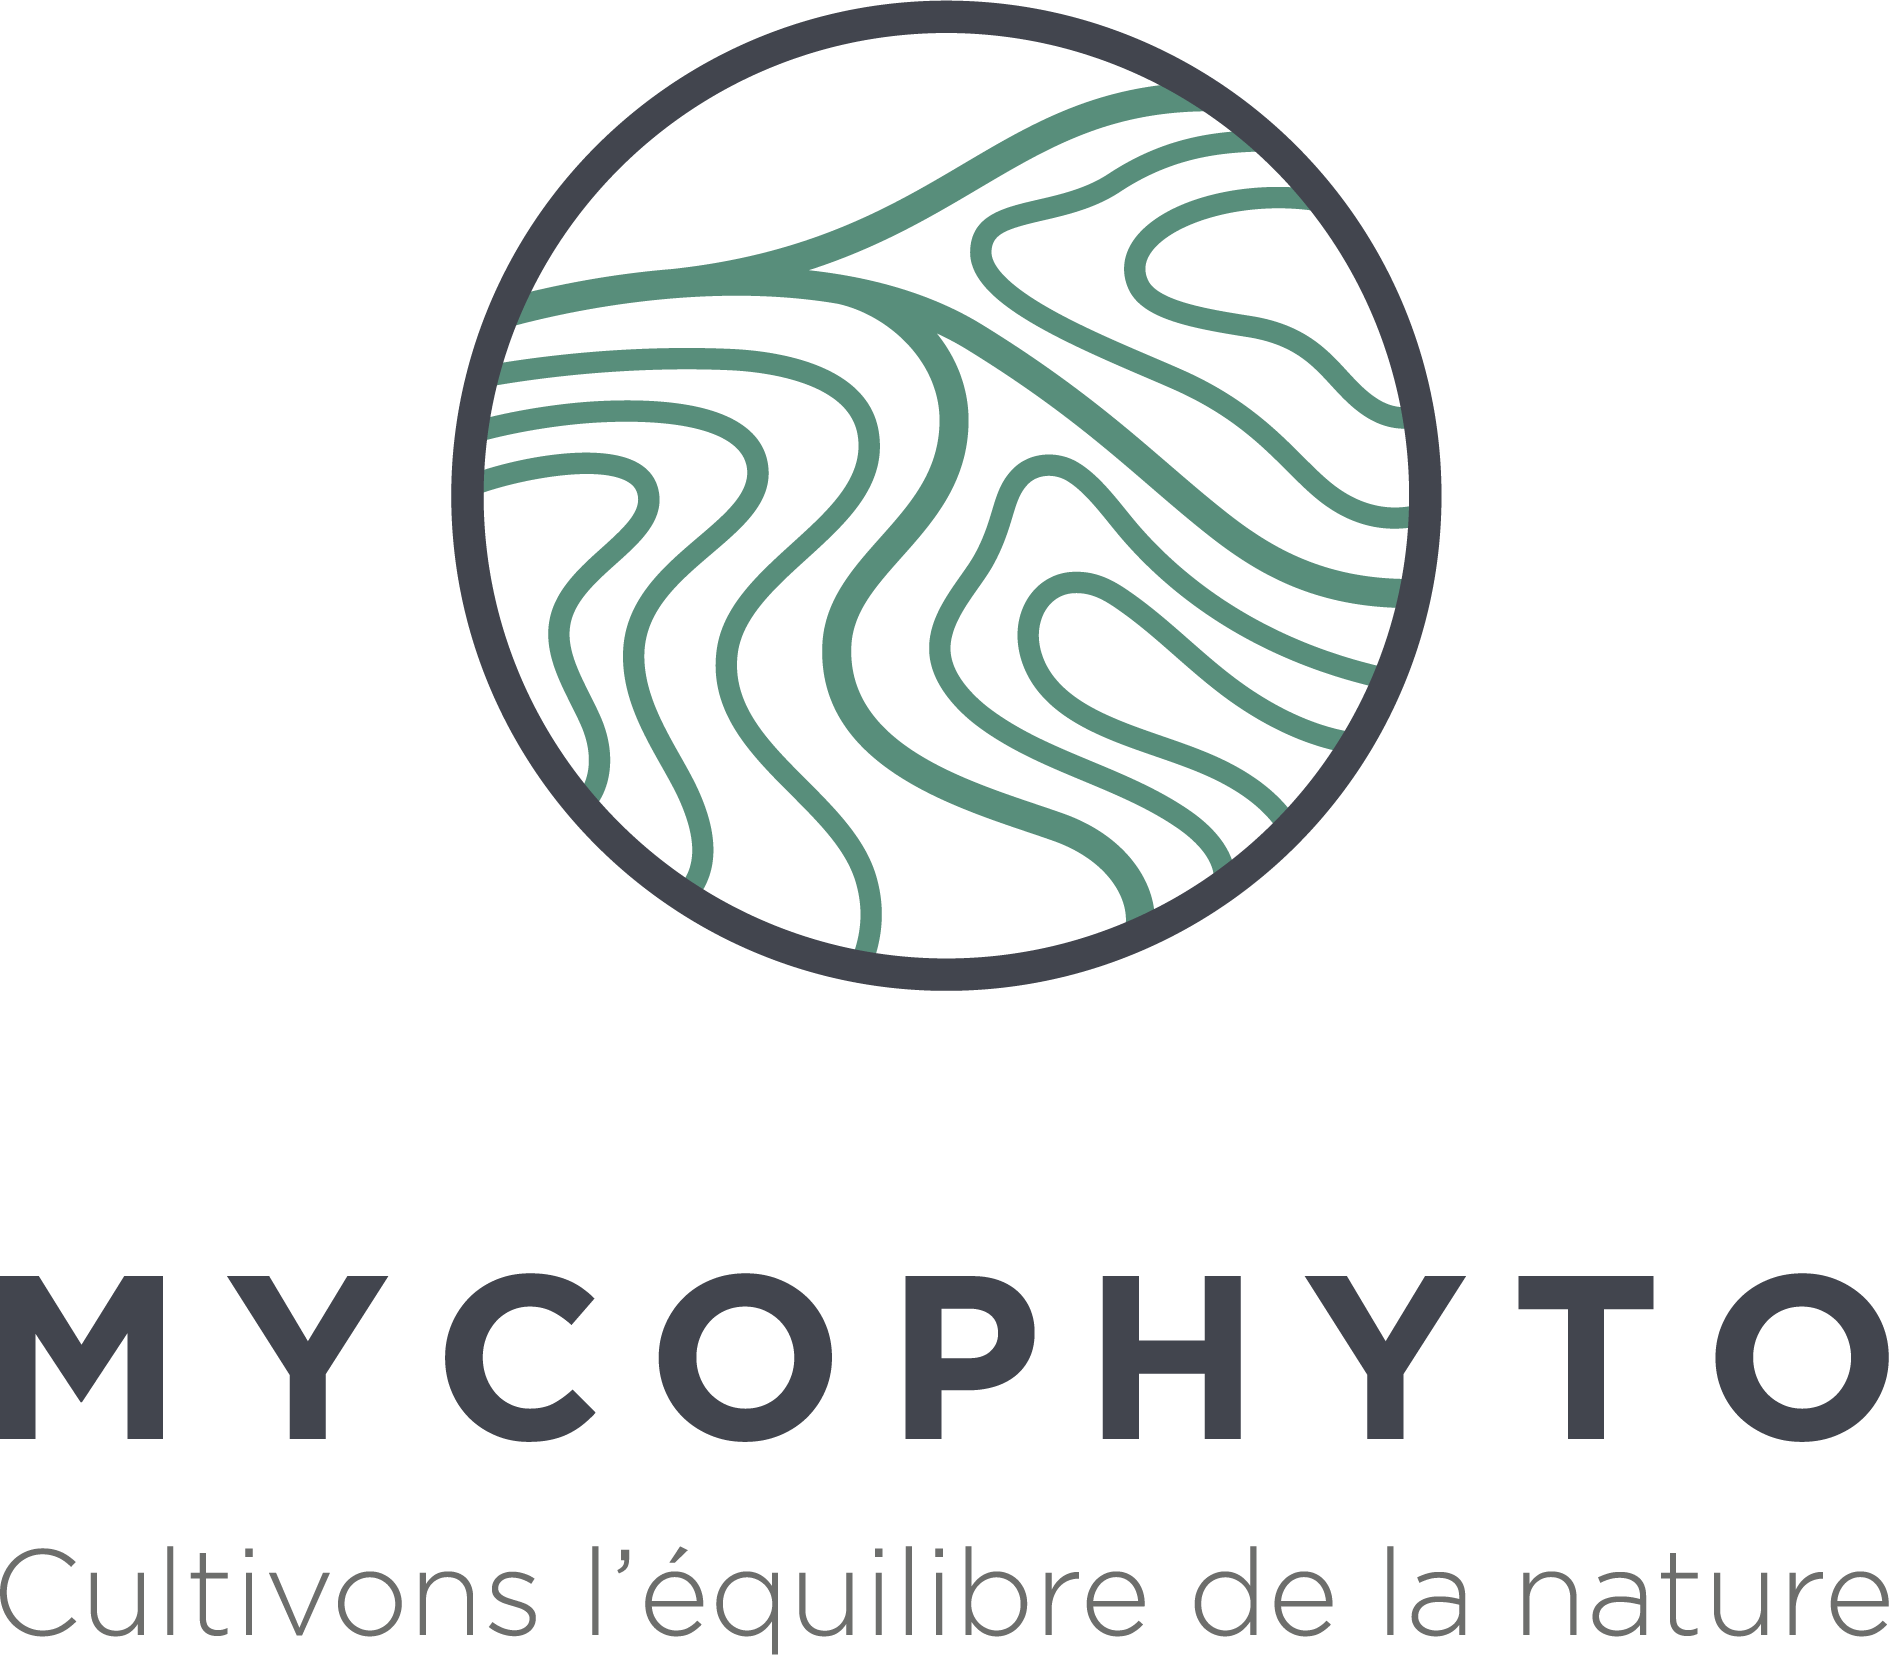 Mycophyto